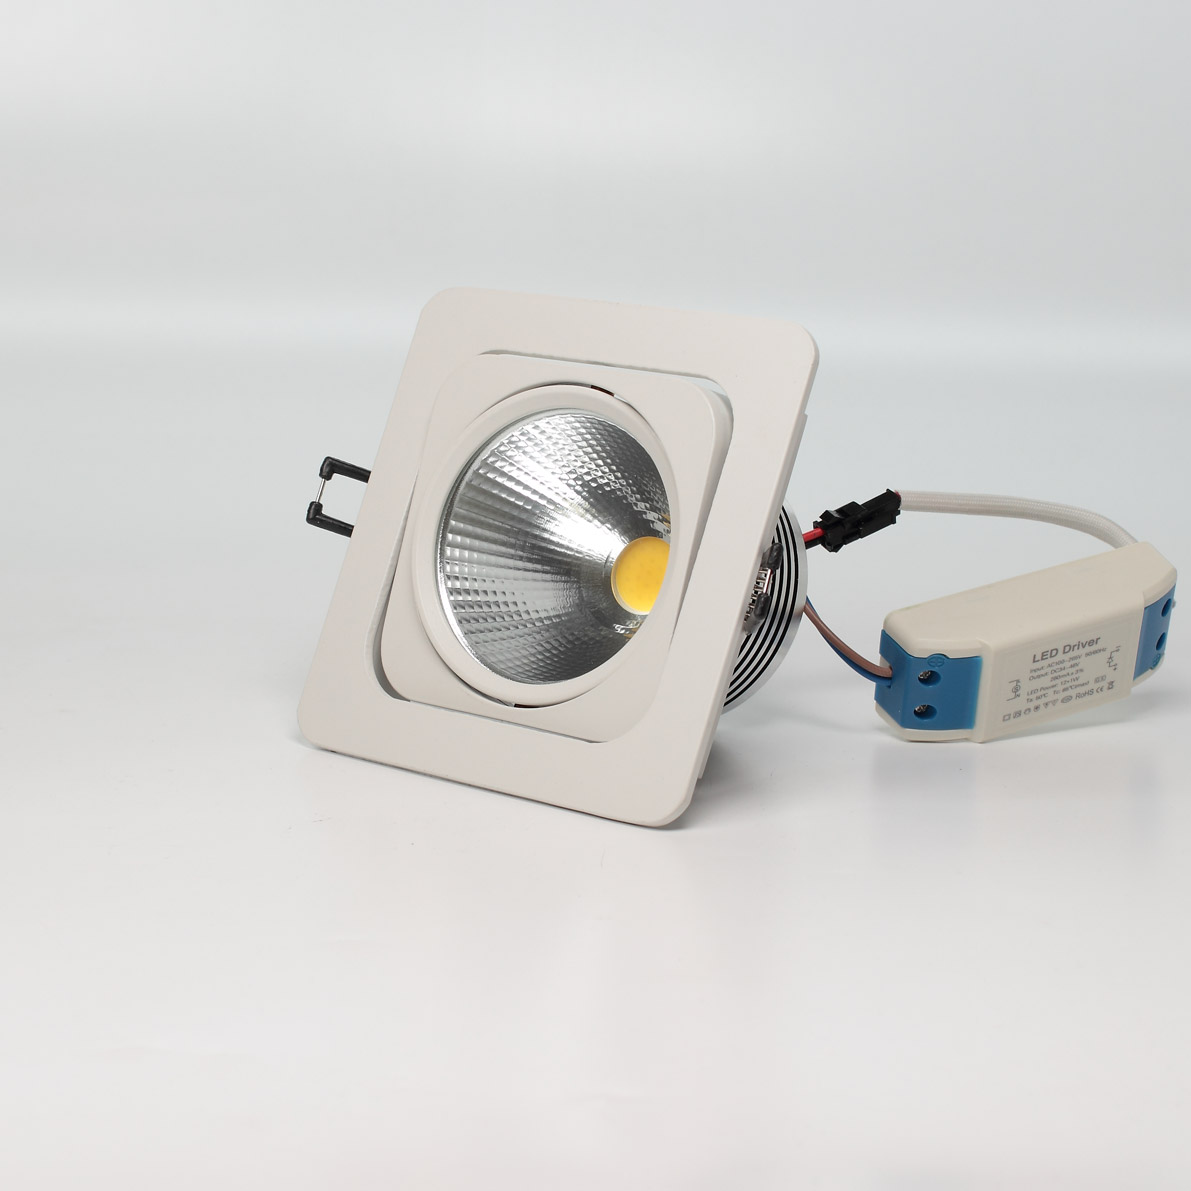 Светодиодные светильники Светодиодный светильник встраиваемый 120.1 series white housing BW14 (10W,220V,day white)